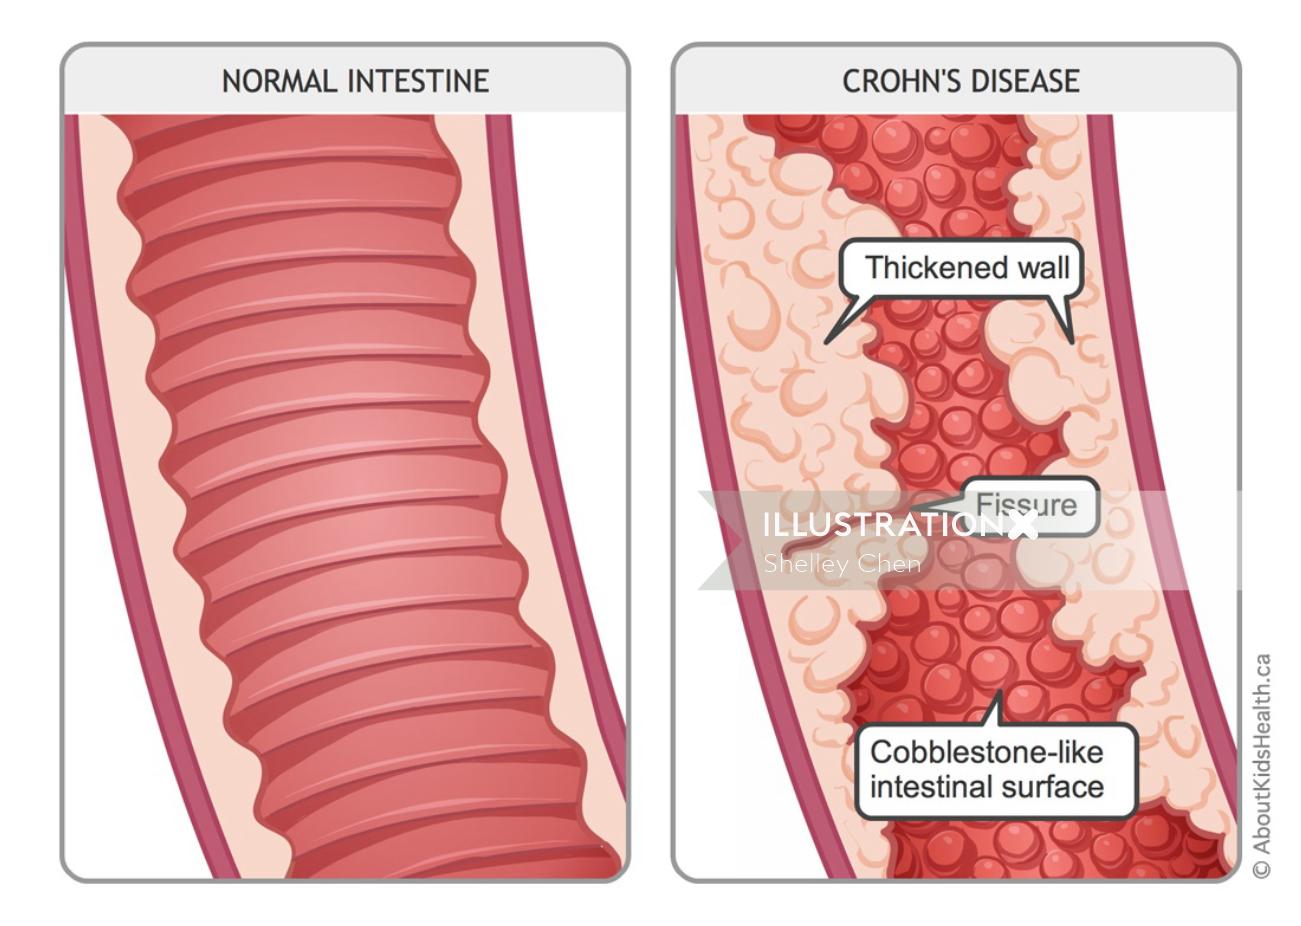 Crohn's disease illustration by Shelley Li Wen Chen